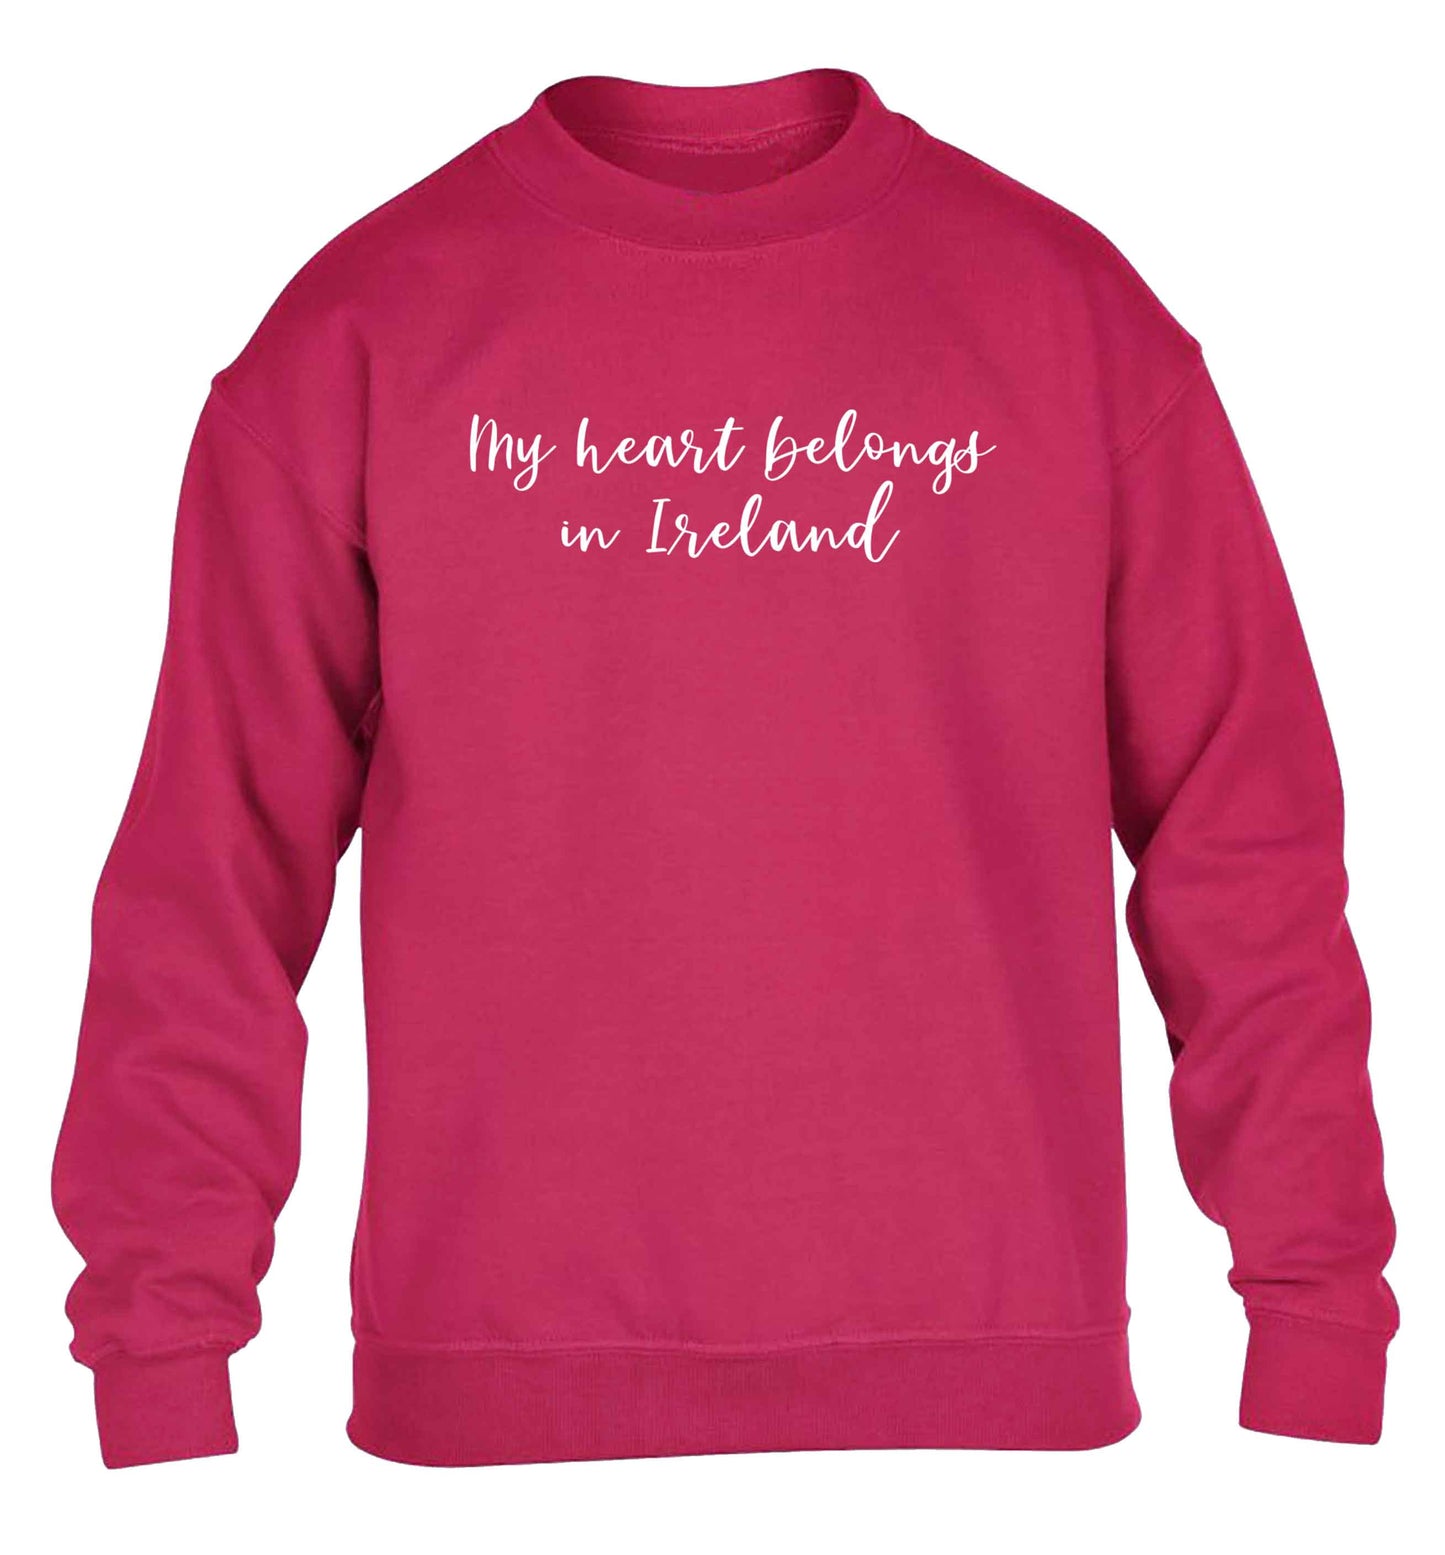 My heart belongs in Ireland children's pink sweater 12-13 Years